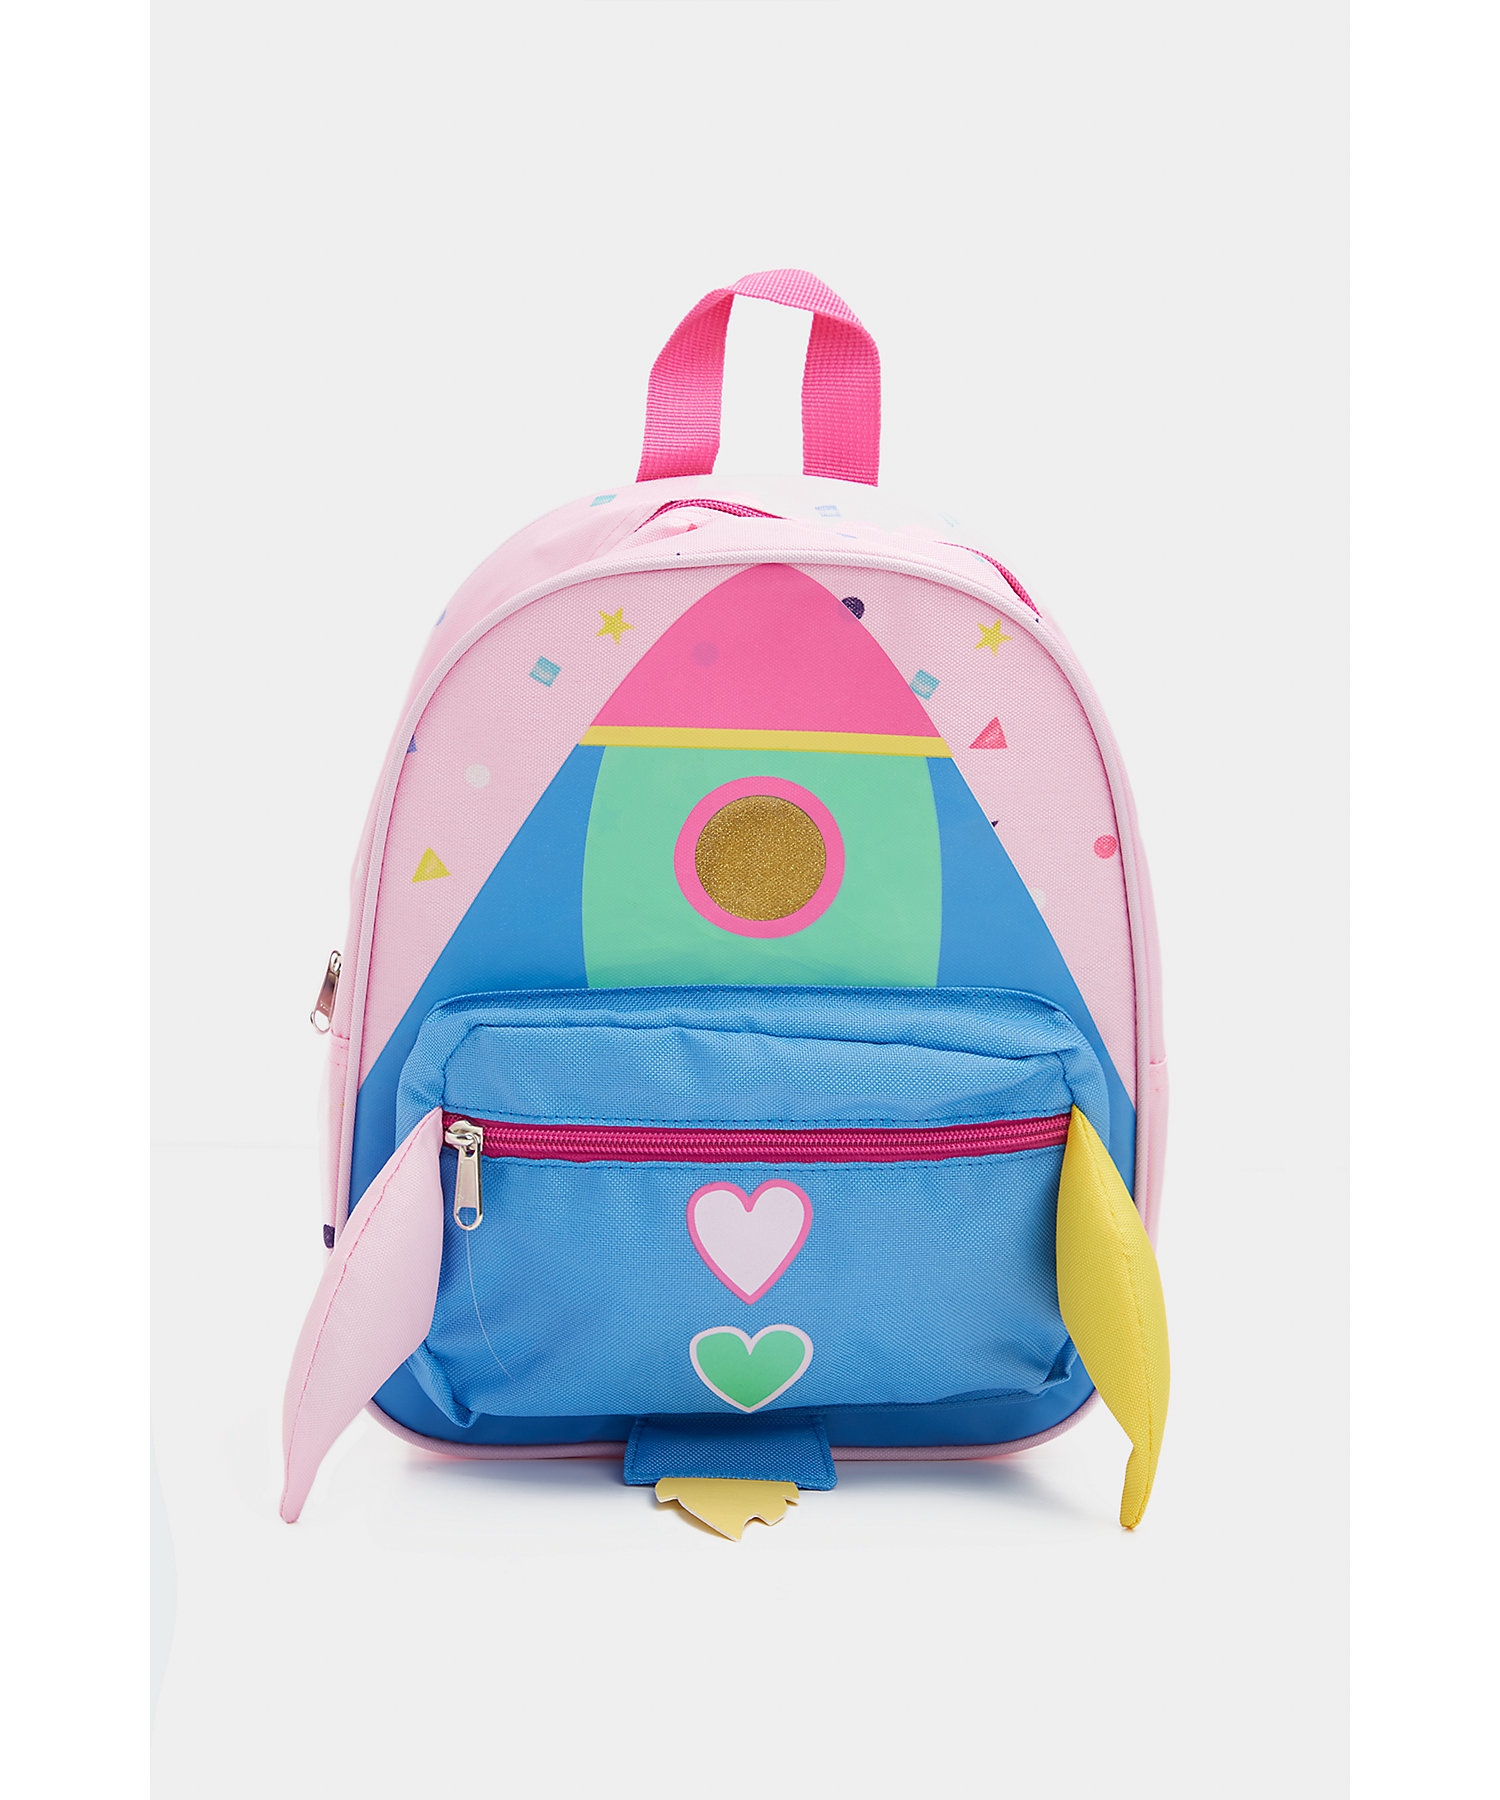 Girls Bags -Multicolor